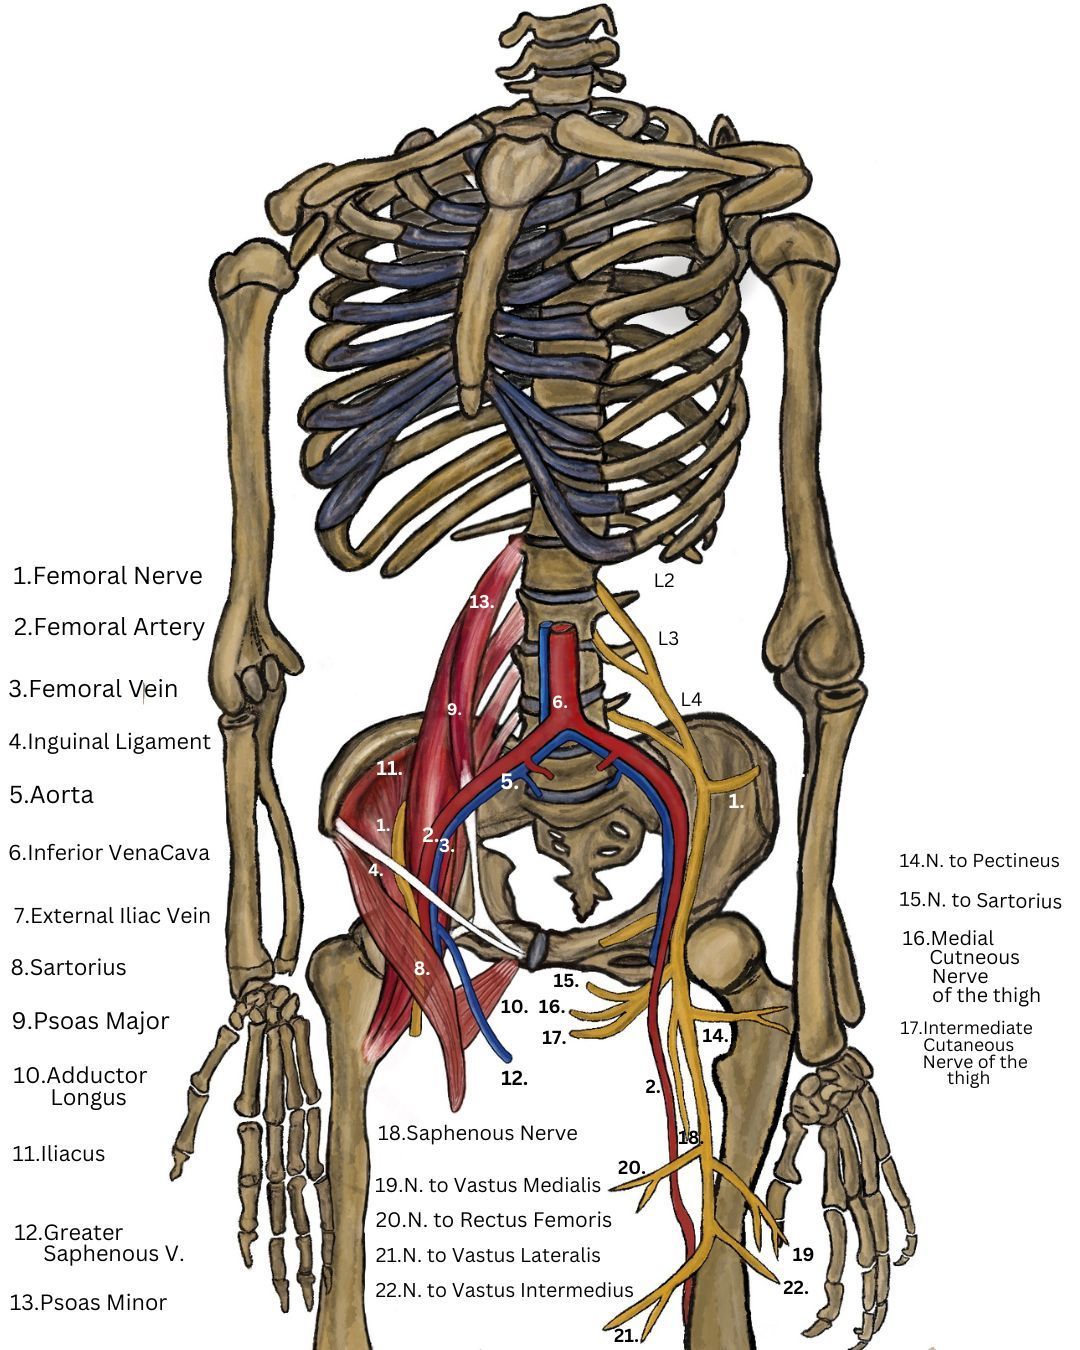 Anatomy of the Femoral nerve